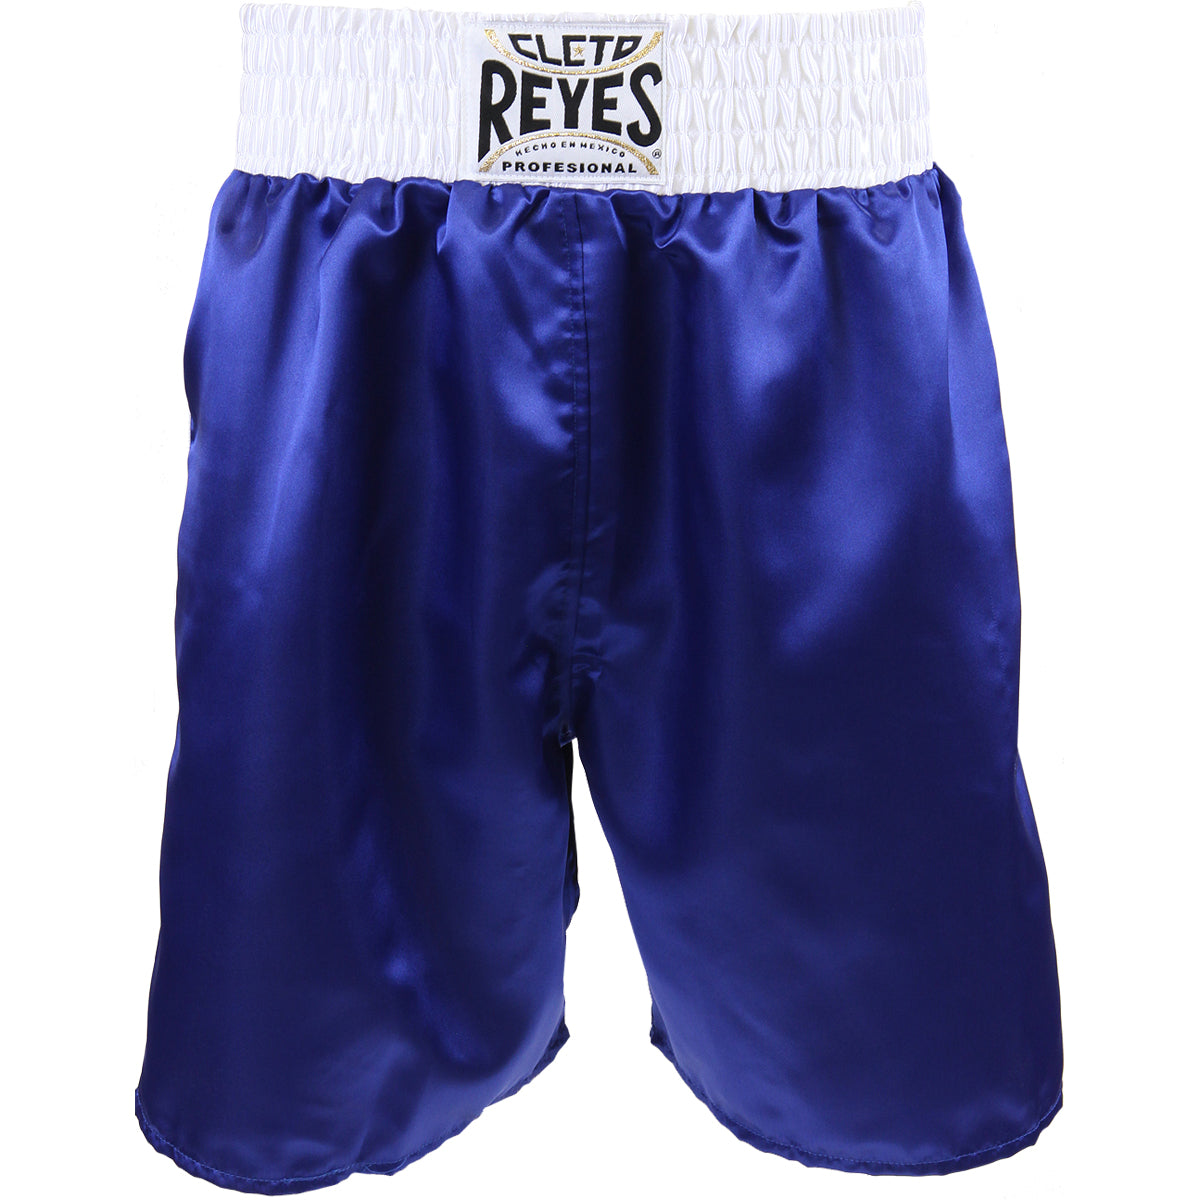 Cleto Reyes Satin Classic Boxing Trunks - XL (44") - Blue/White Cleto Reyes